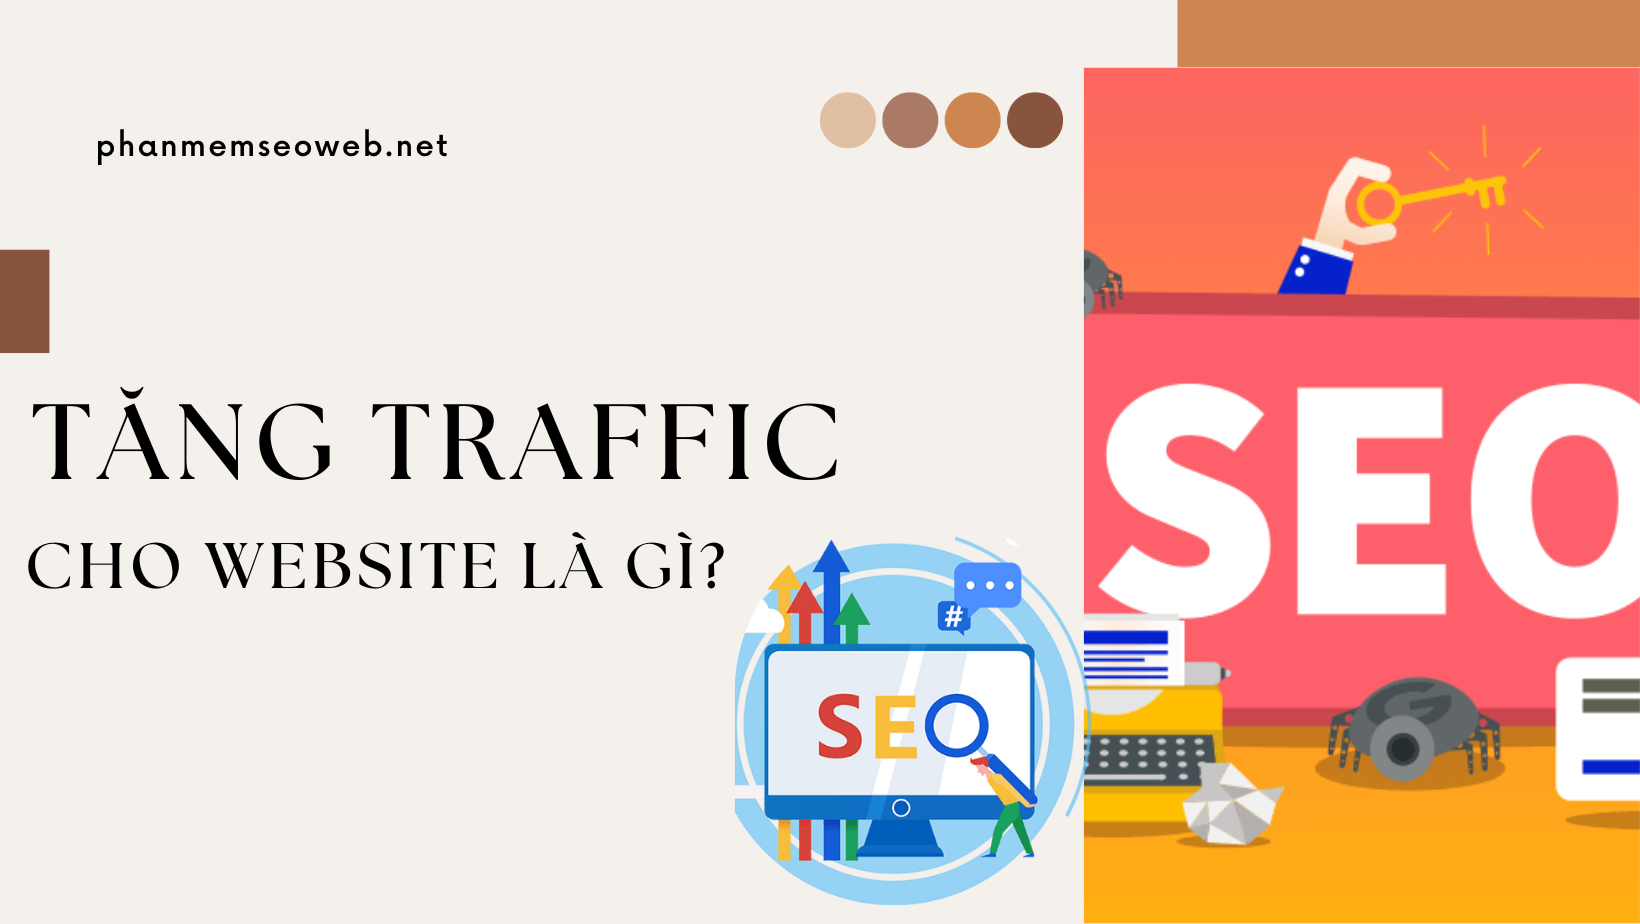 Tăng traffic cho website - Phần mềm tăng traffic cho website